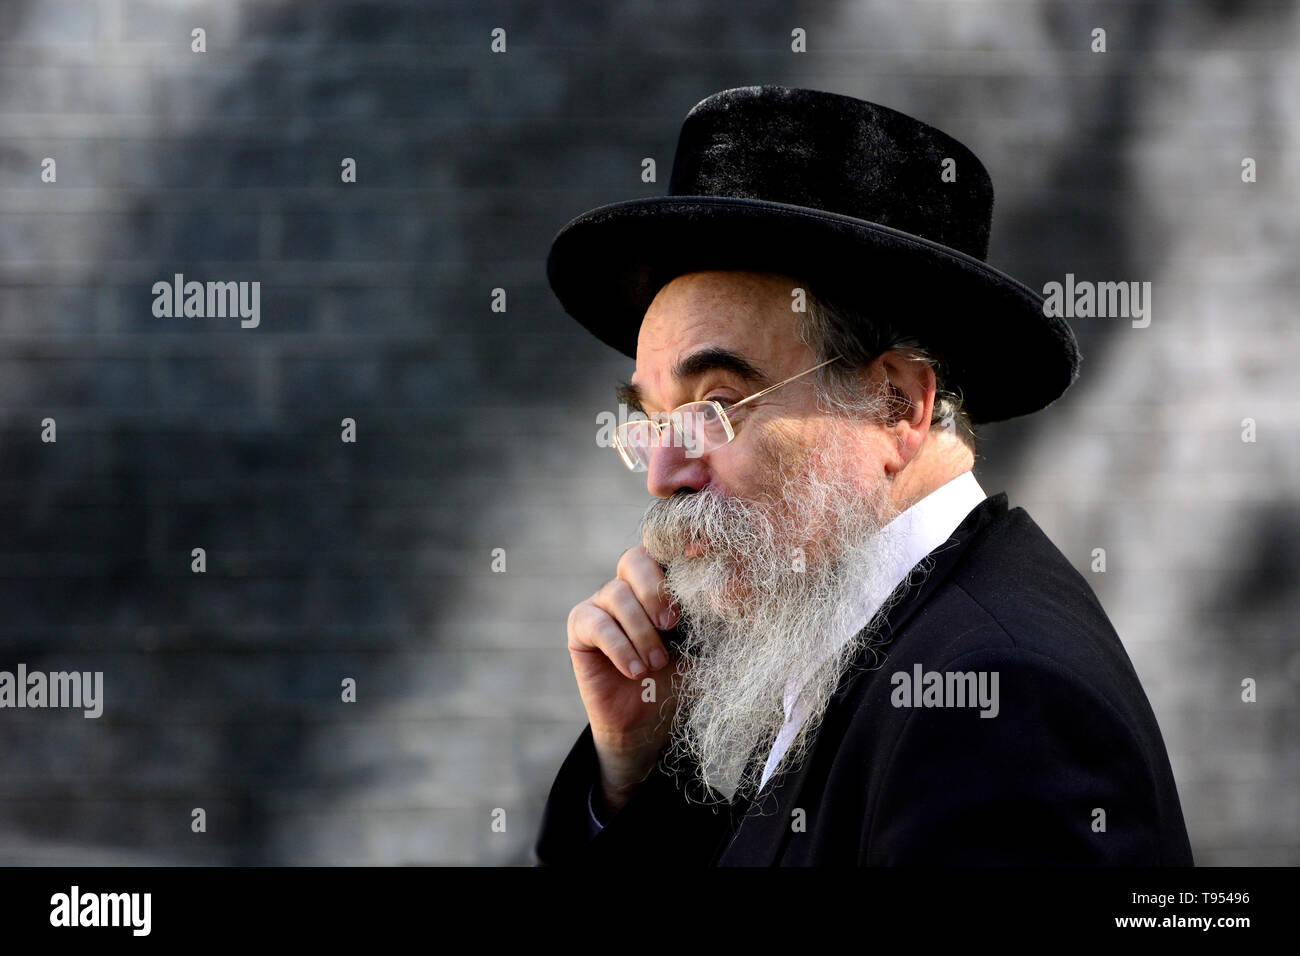 London, England, UK. Abraham Pinter - Haredi rabbi/politician from Stamford Hill,  represents Haredi interests on the London Jewish Forum. On his mobi Stock Photo